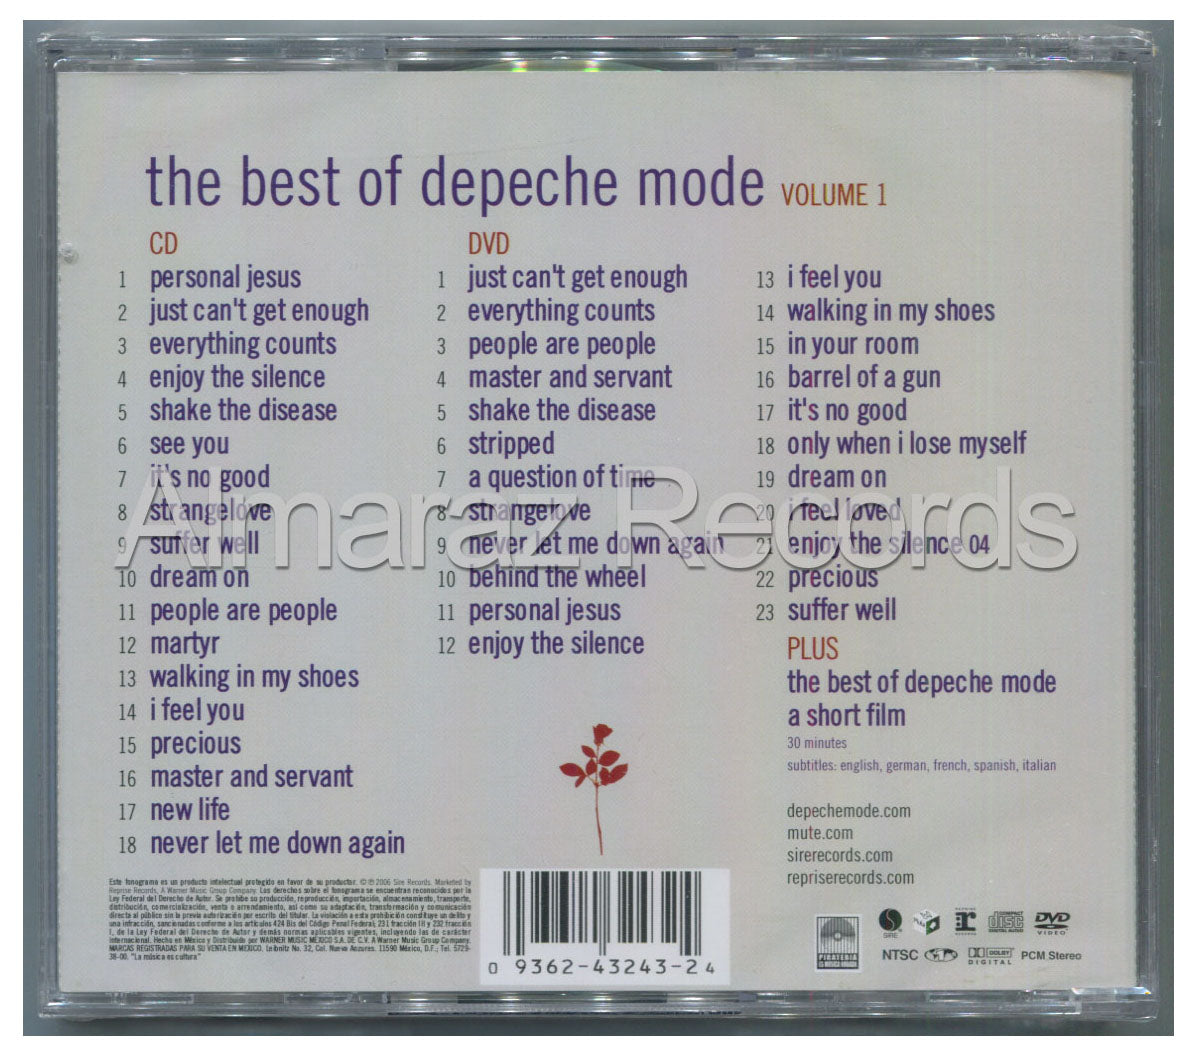 The best of depeche mode